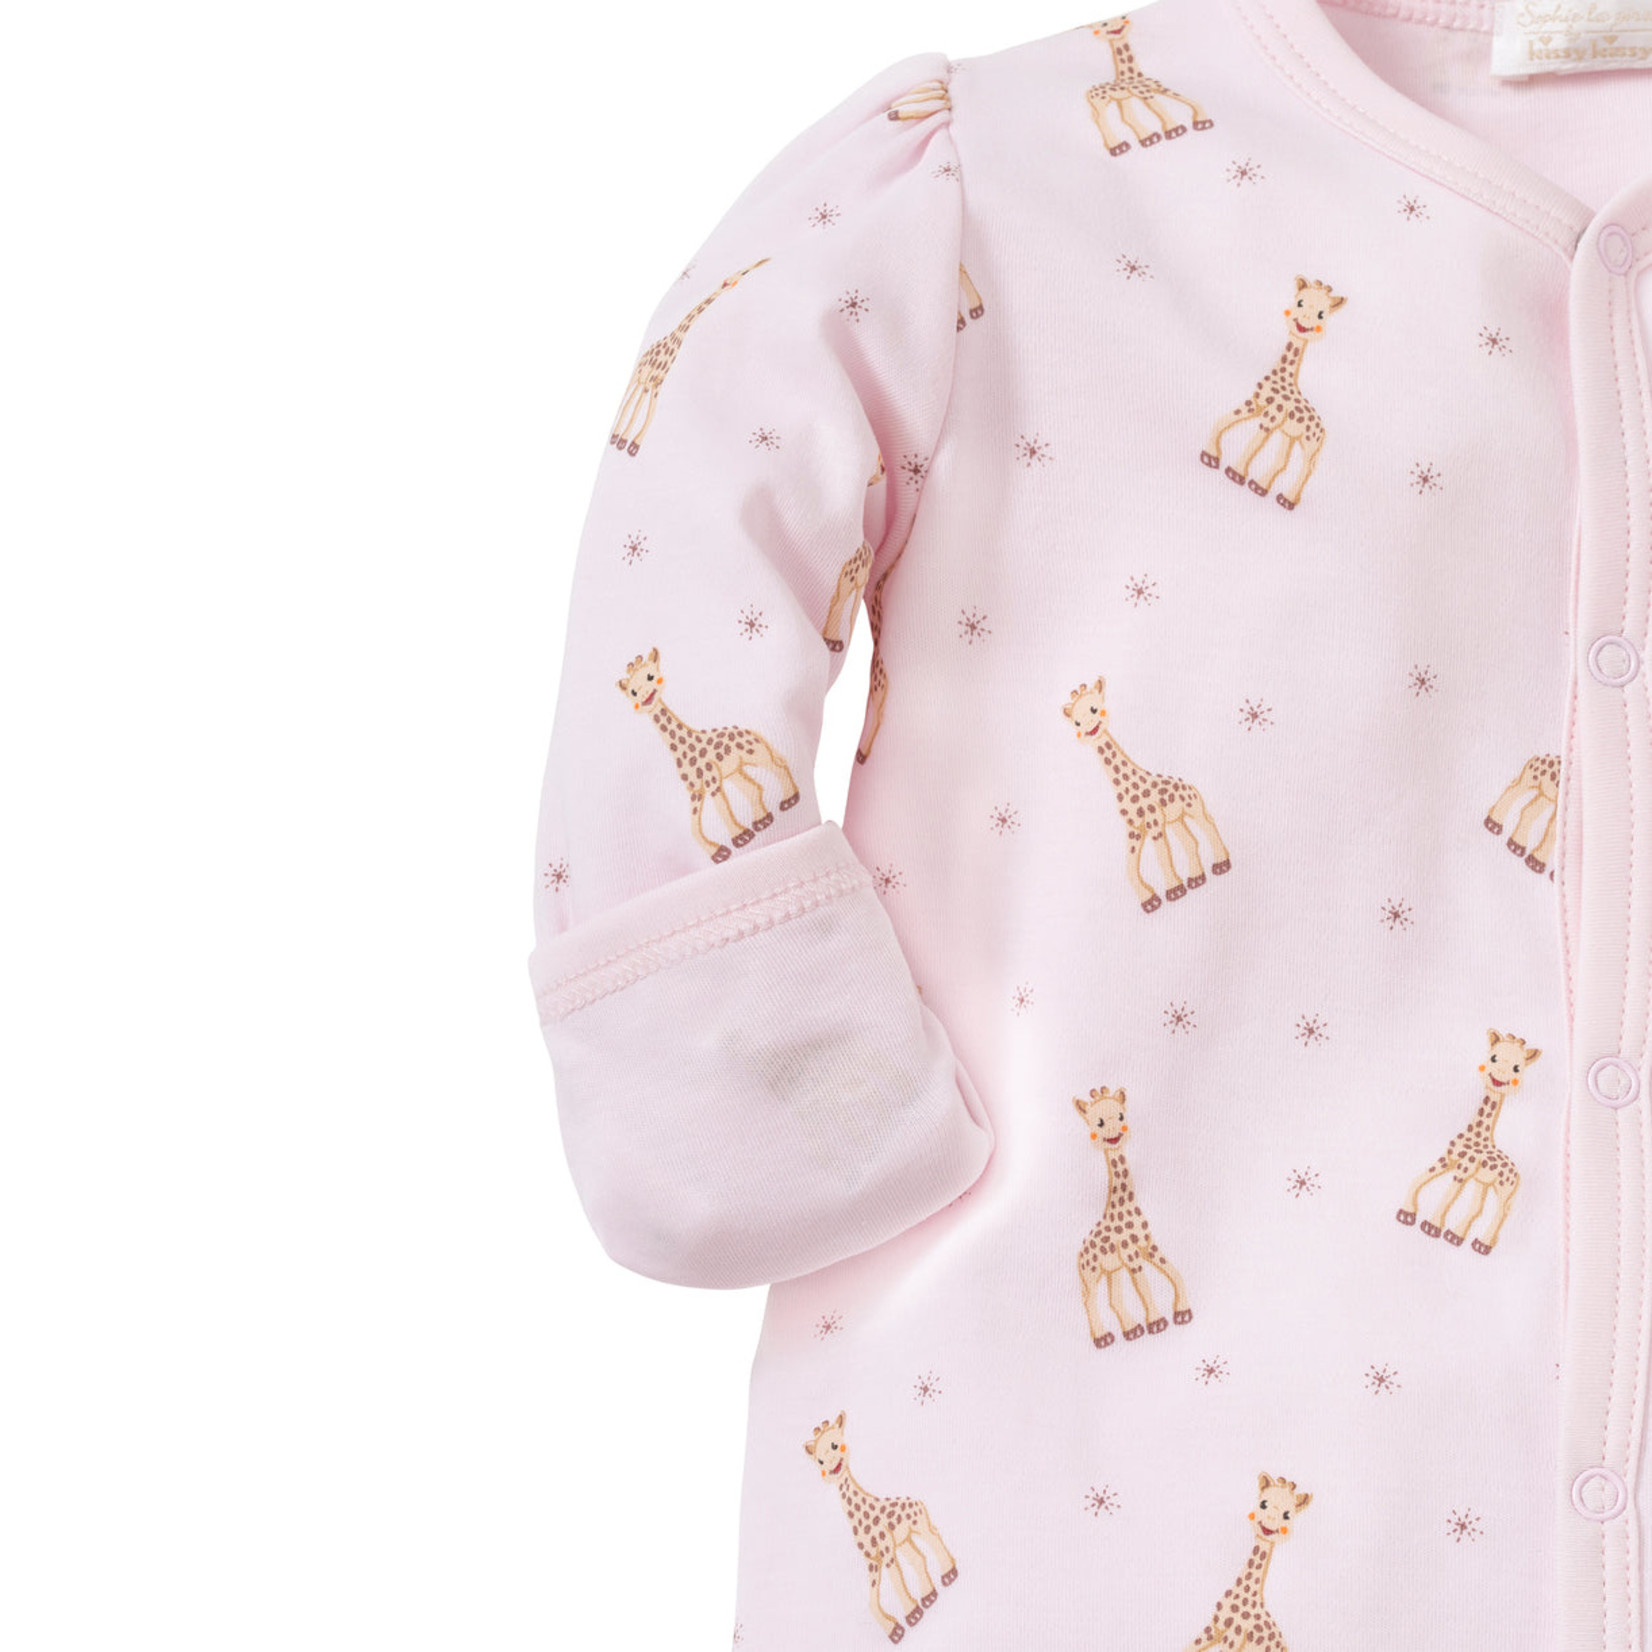 Kissy Kissy Tatiana Co. Sophie La Girafe Print Convertible Gown -Pink/Newborn